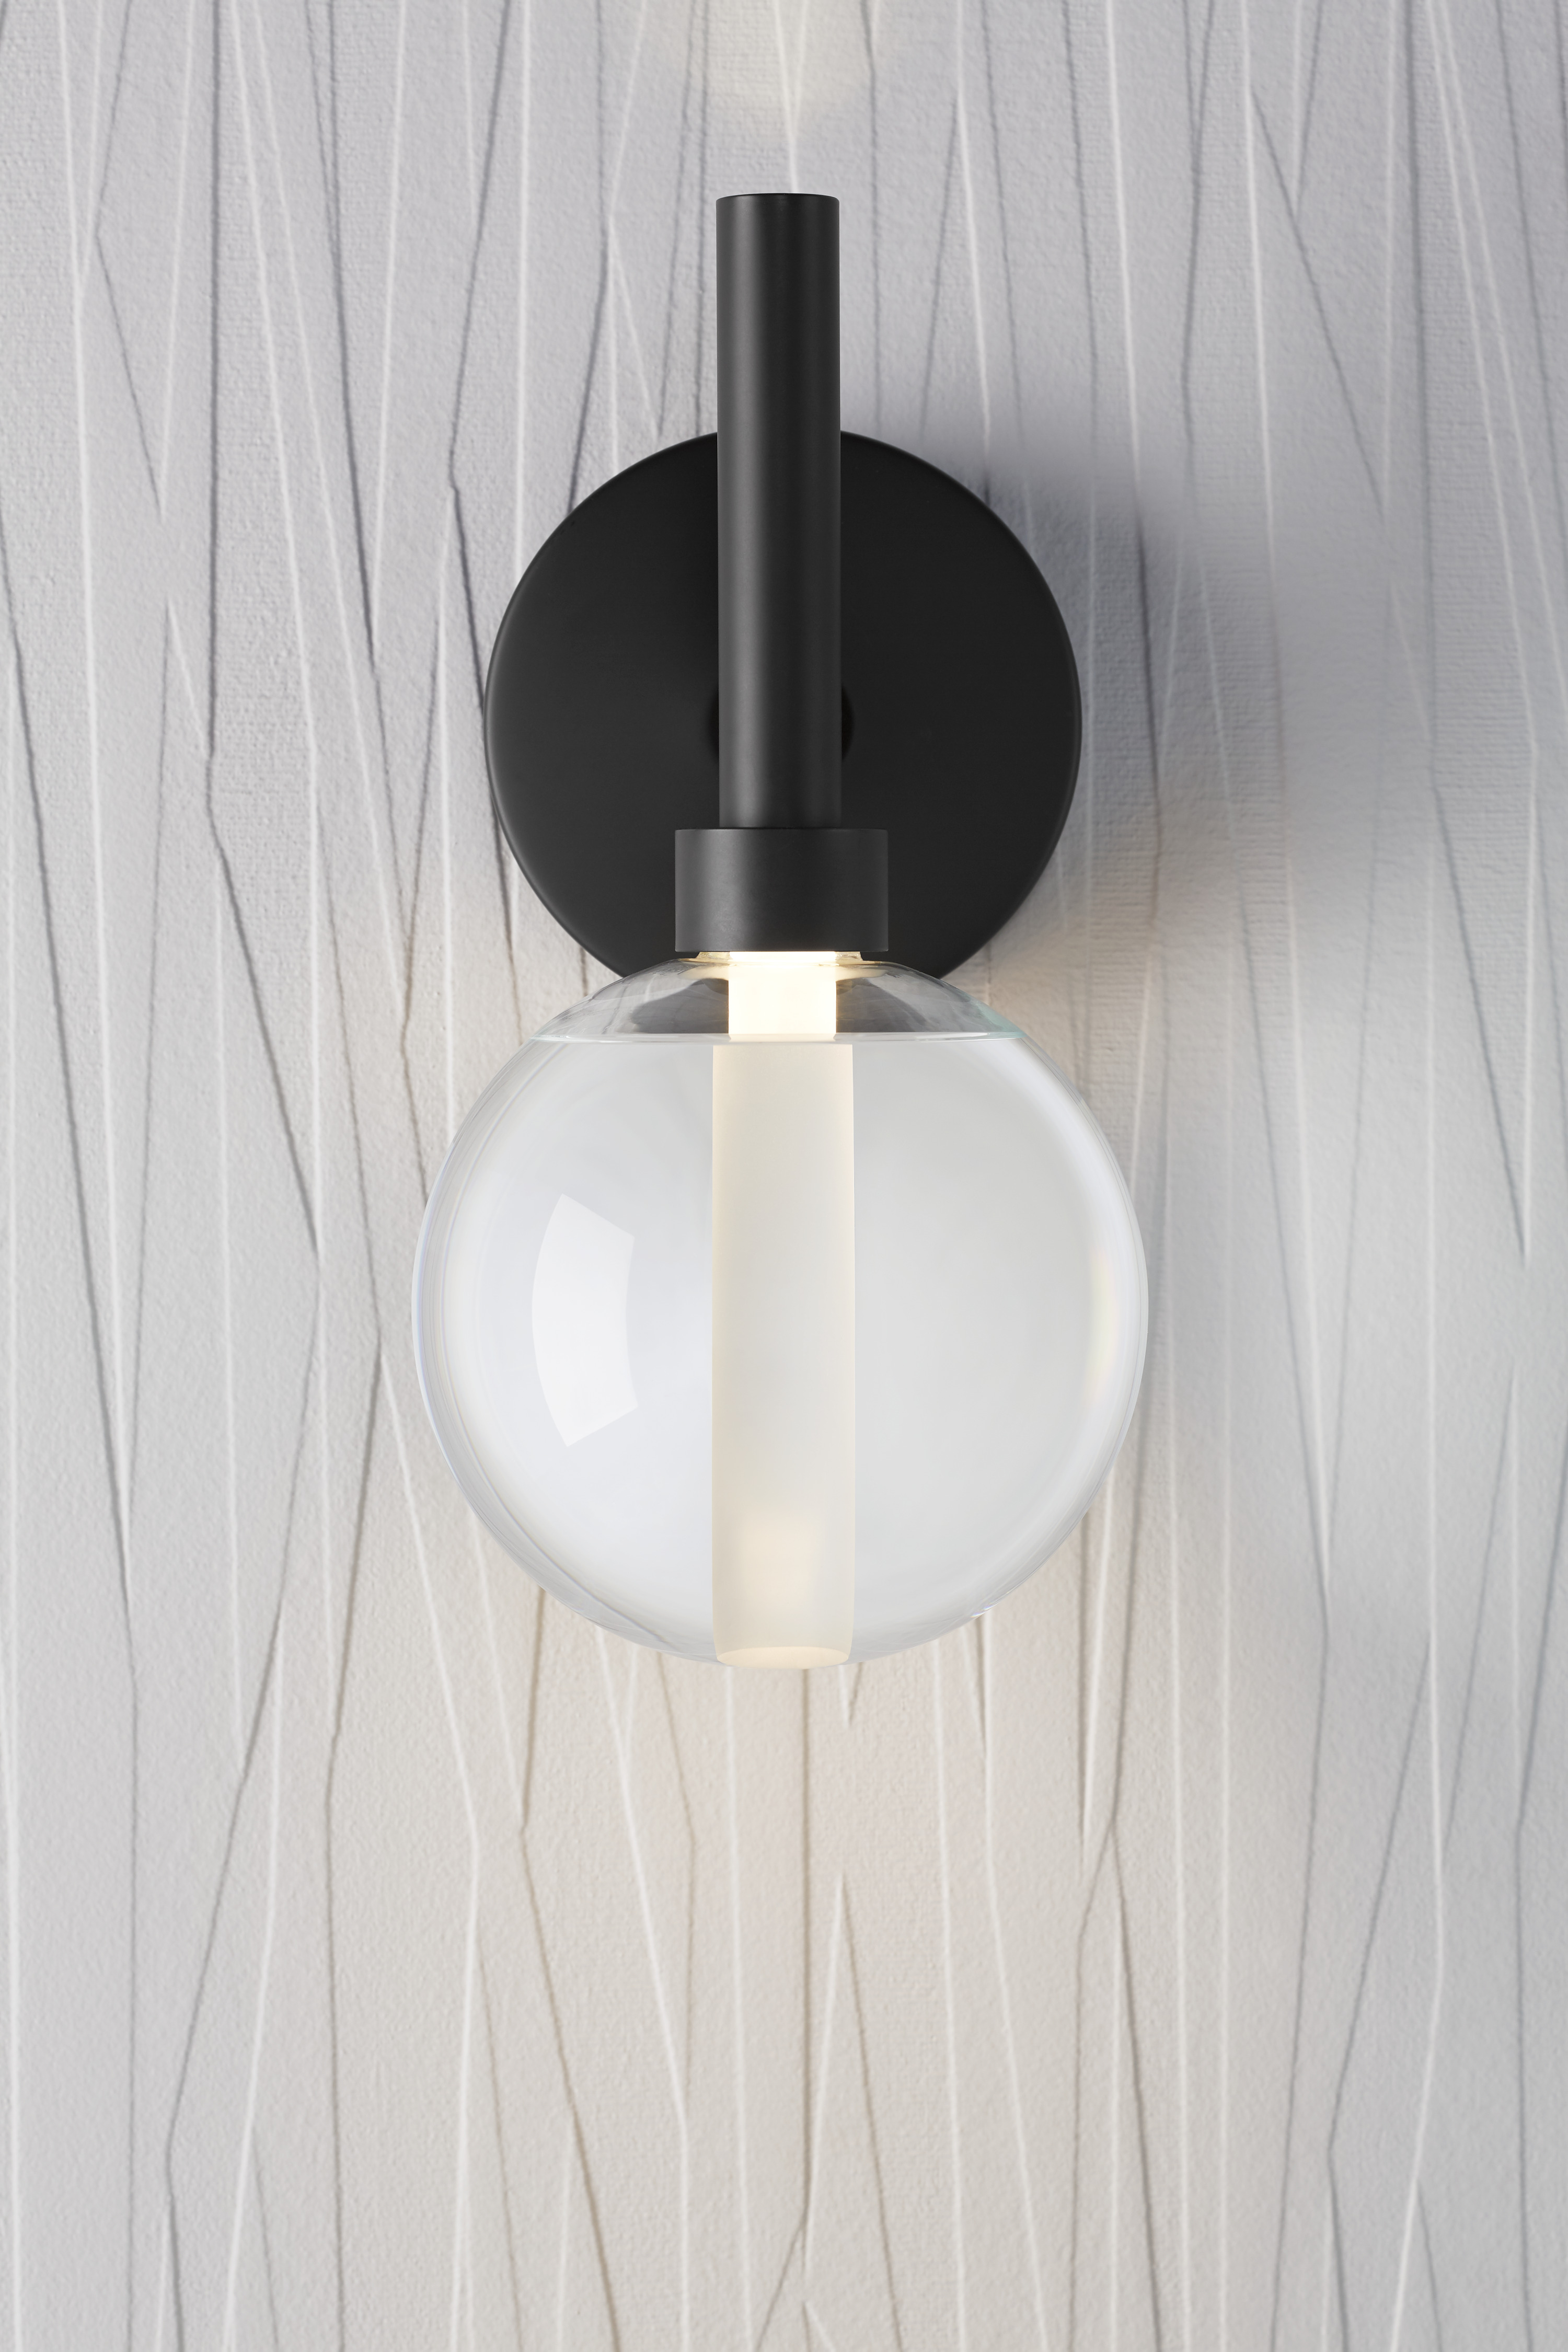 KOHLER® Lighting Presents Range of Choices for Creative Interior ...